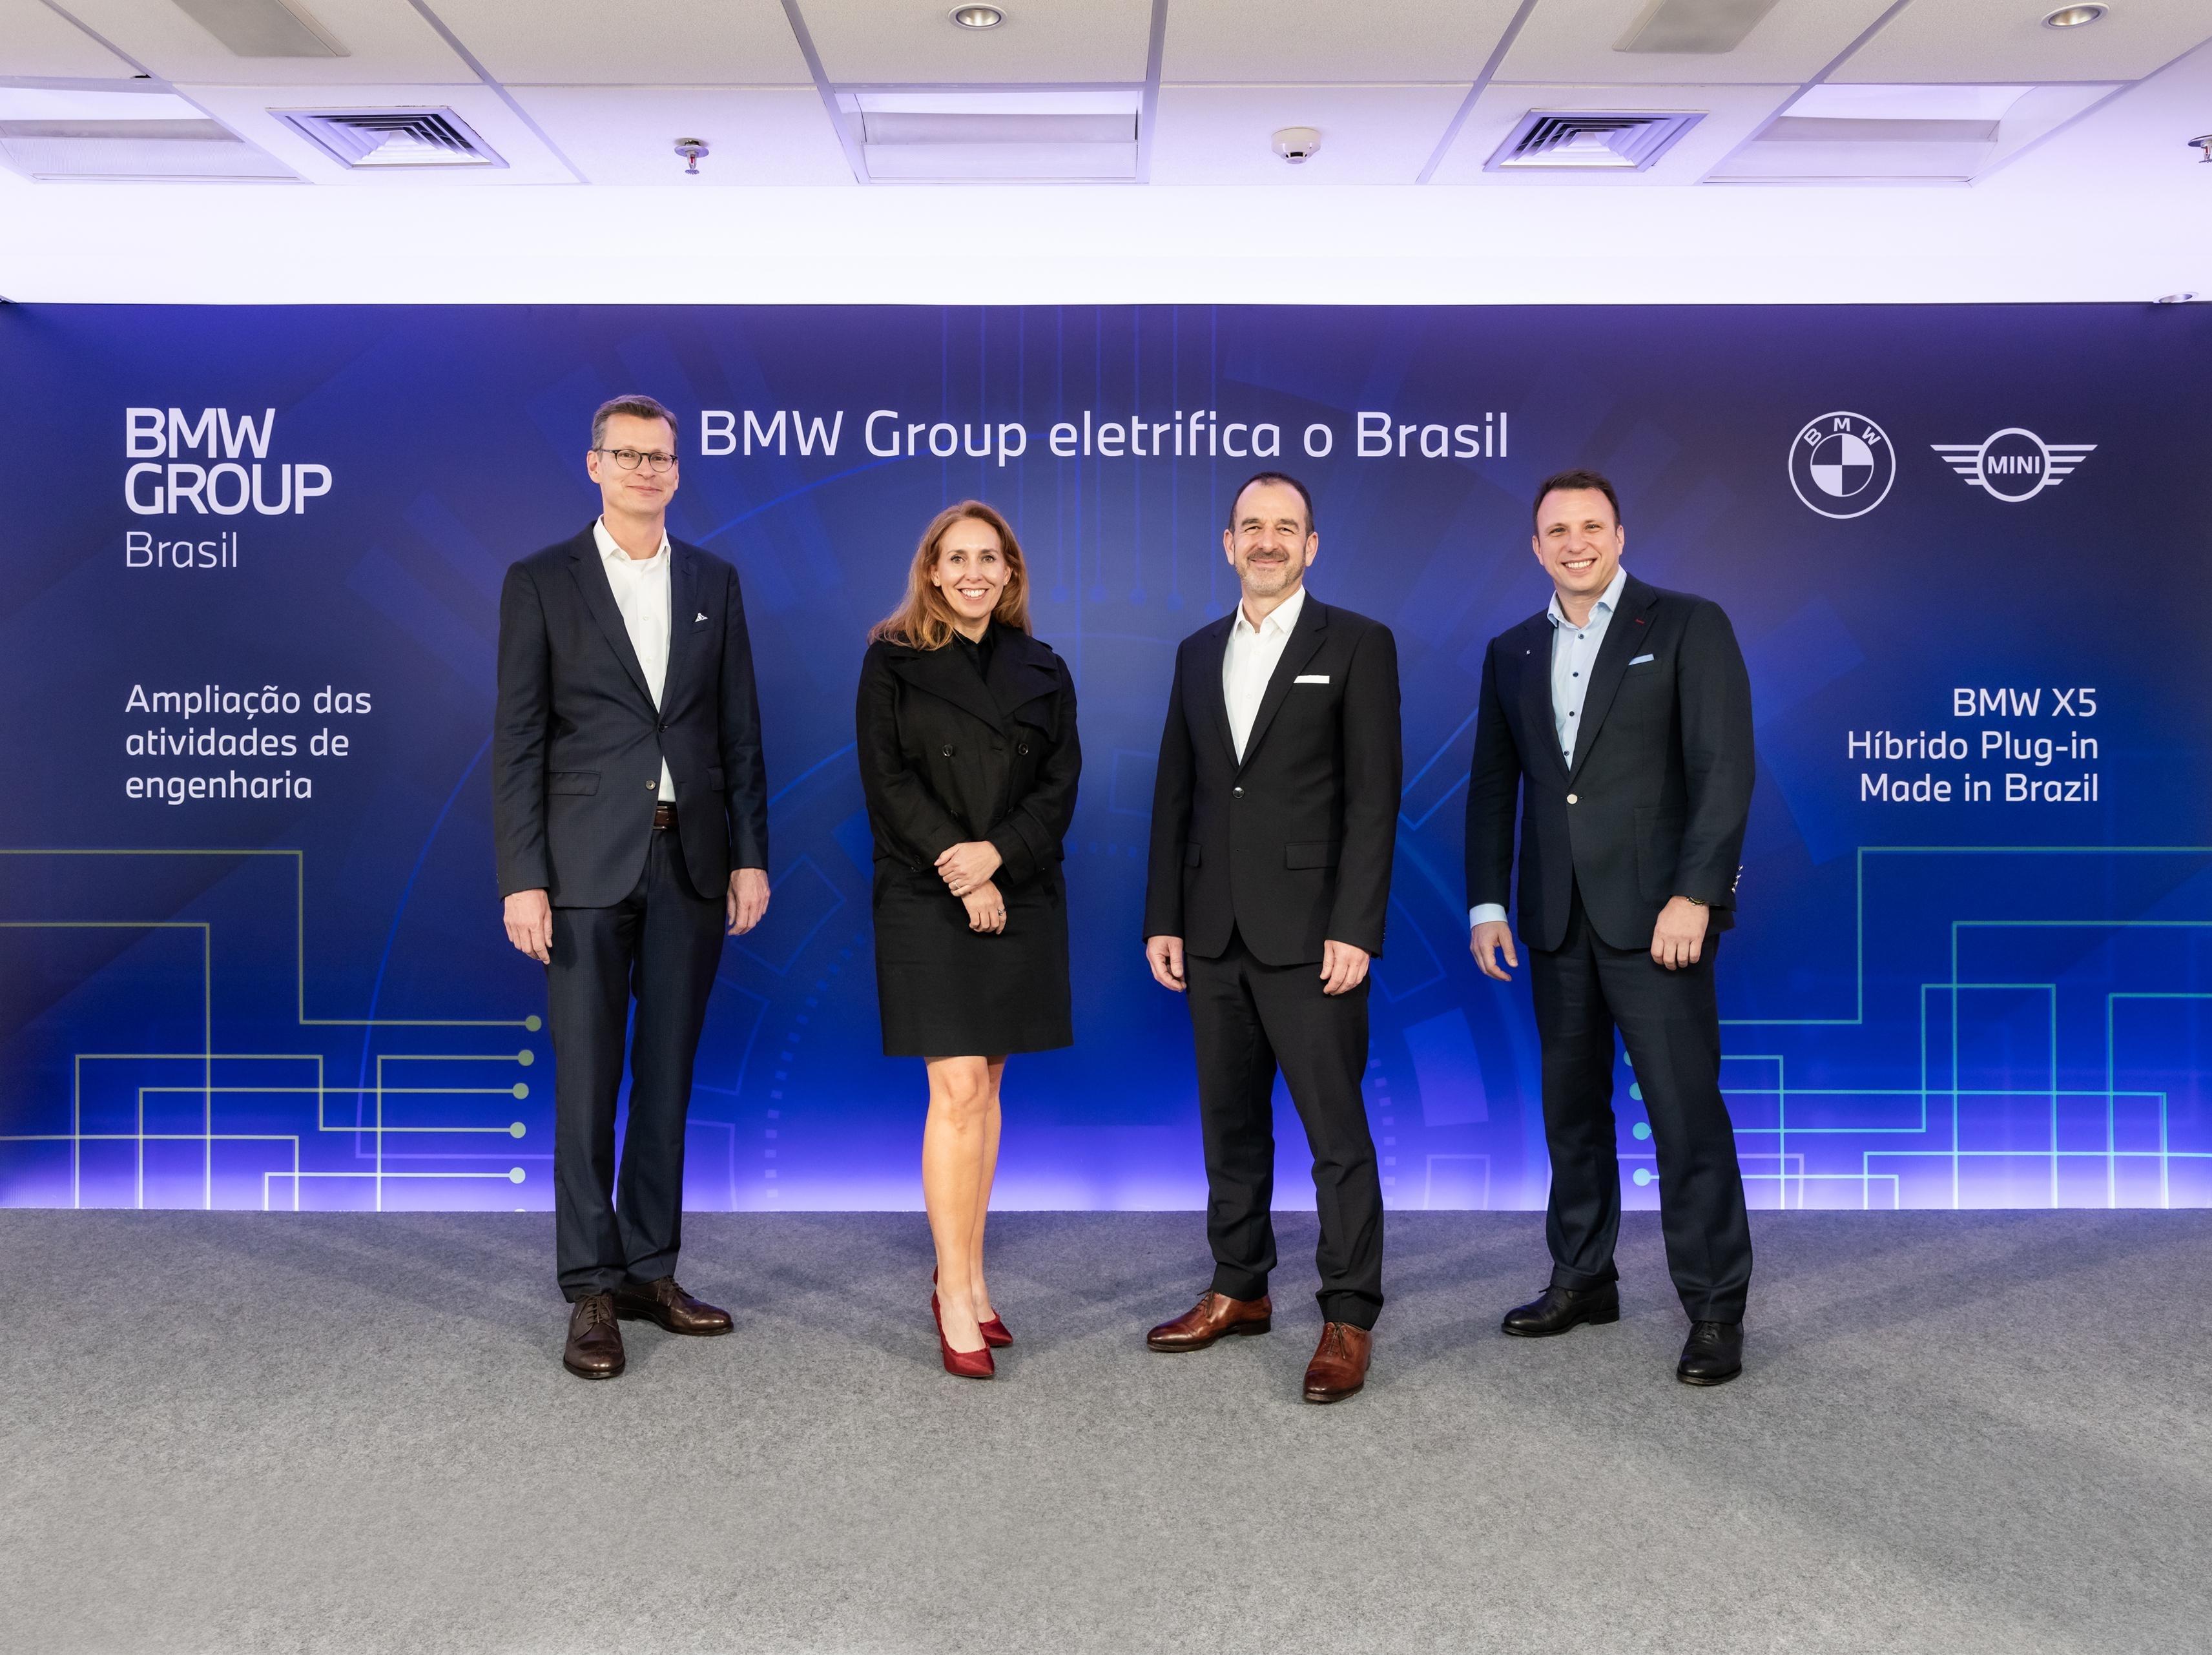 BMW Group está electrificando la planta brasileña de Araquar